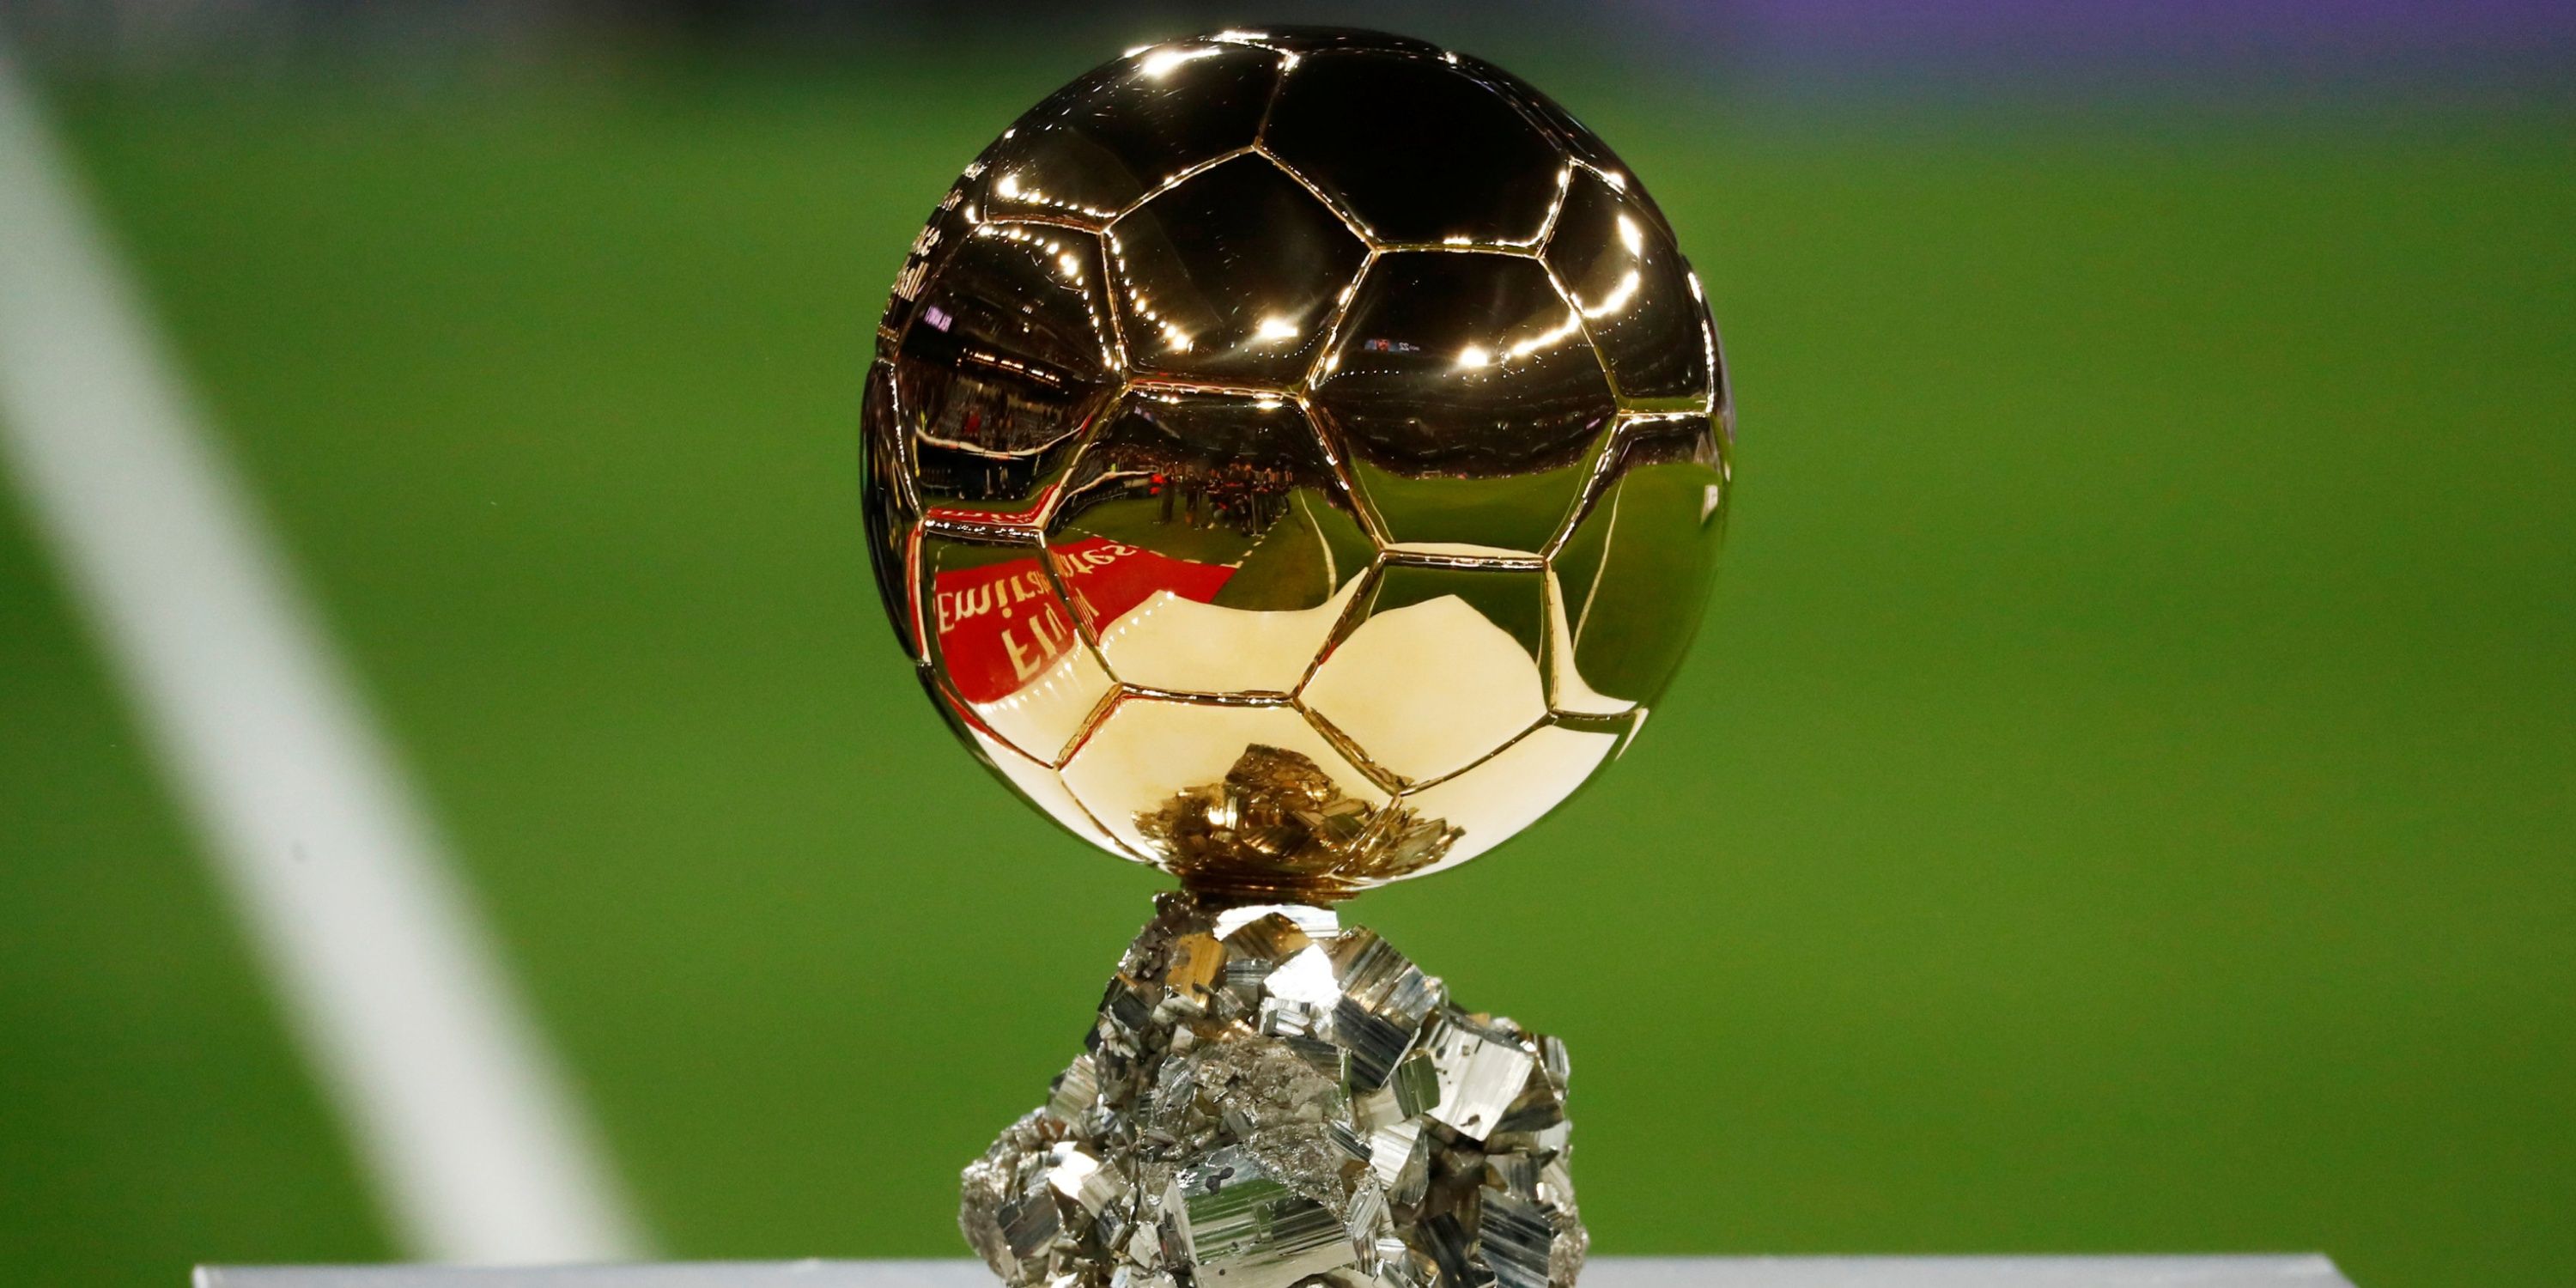 The Ballon d'Or trophy